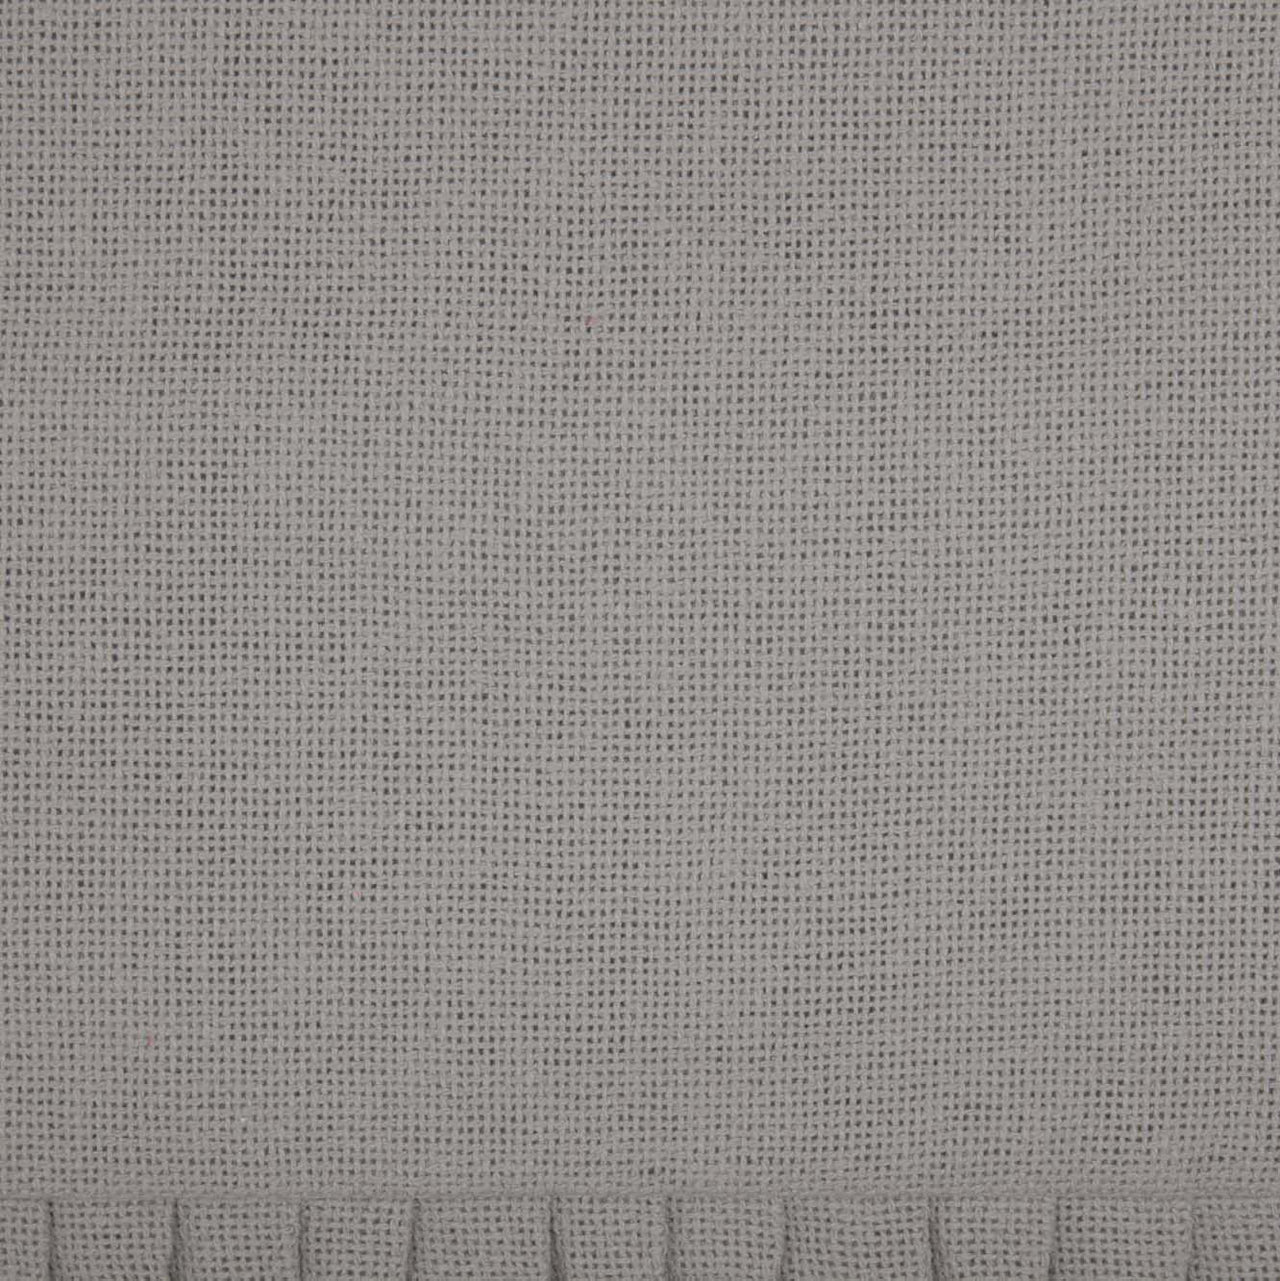 Burlap Dove Grey Fabric Euro Sham w/ Fringed Ruffle 26x26 VHC Brands